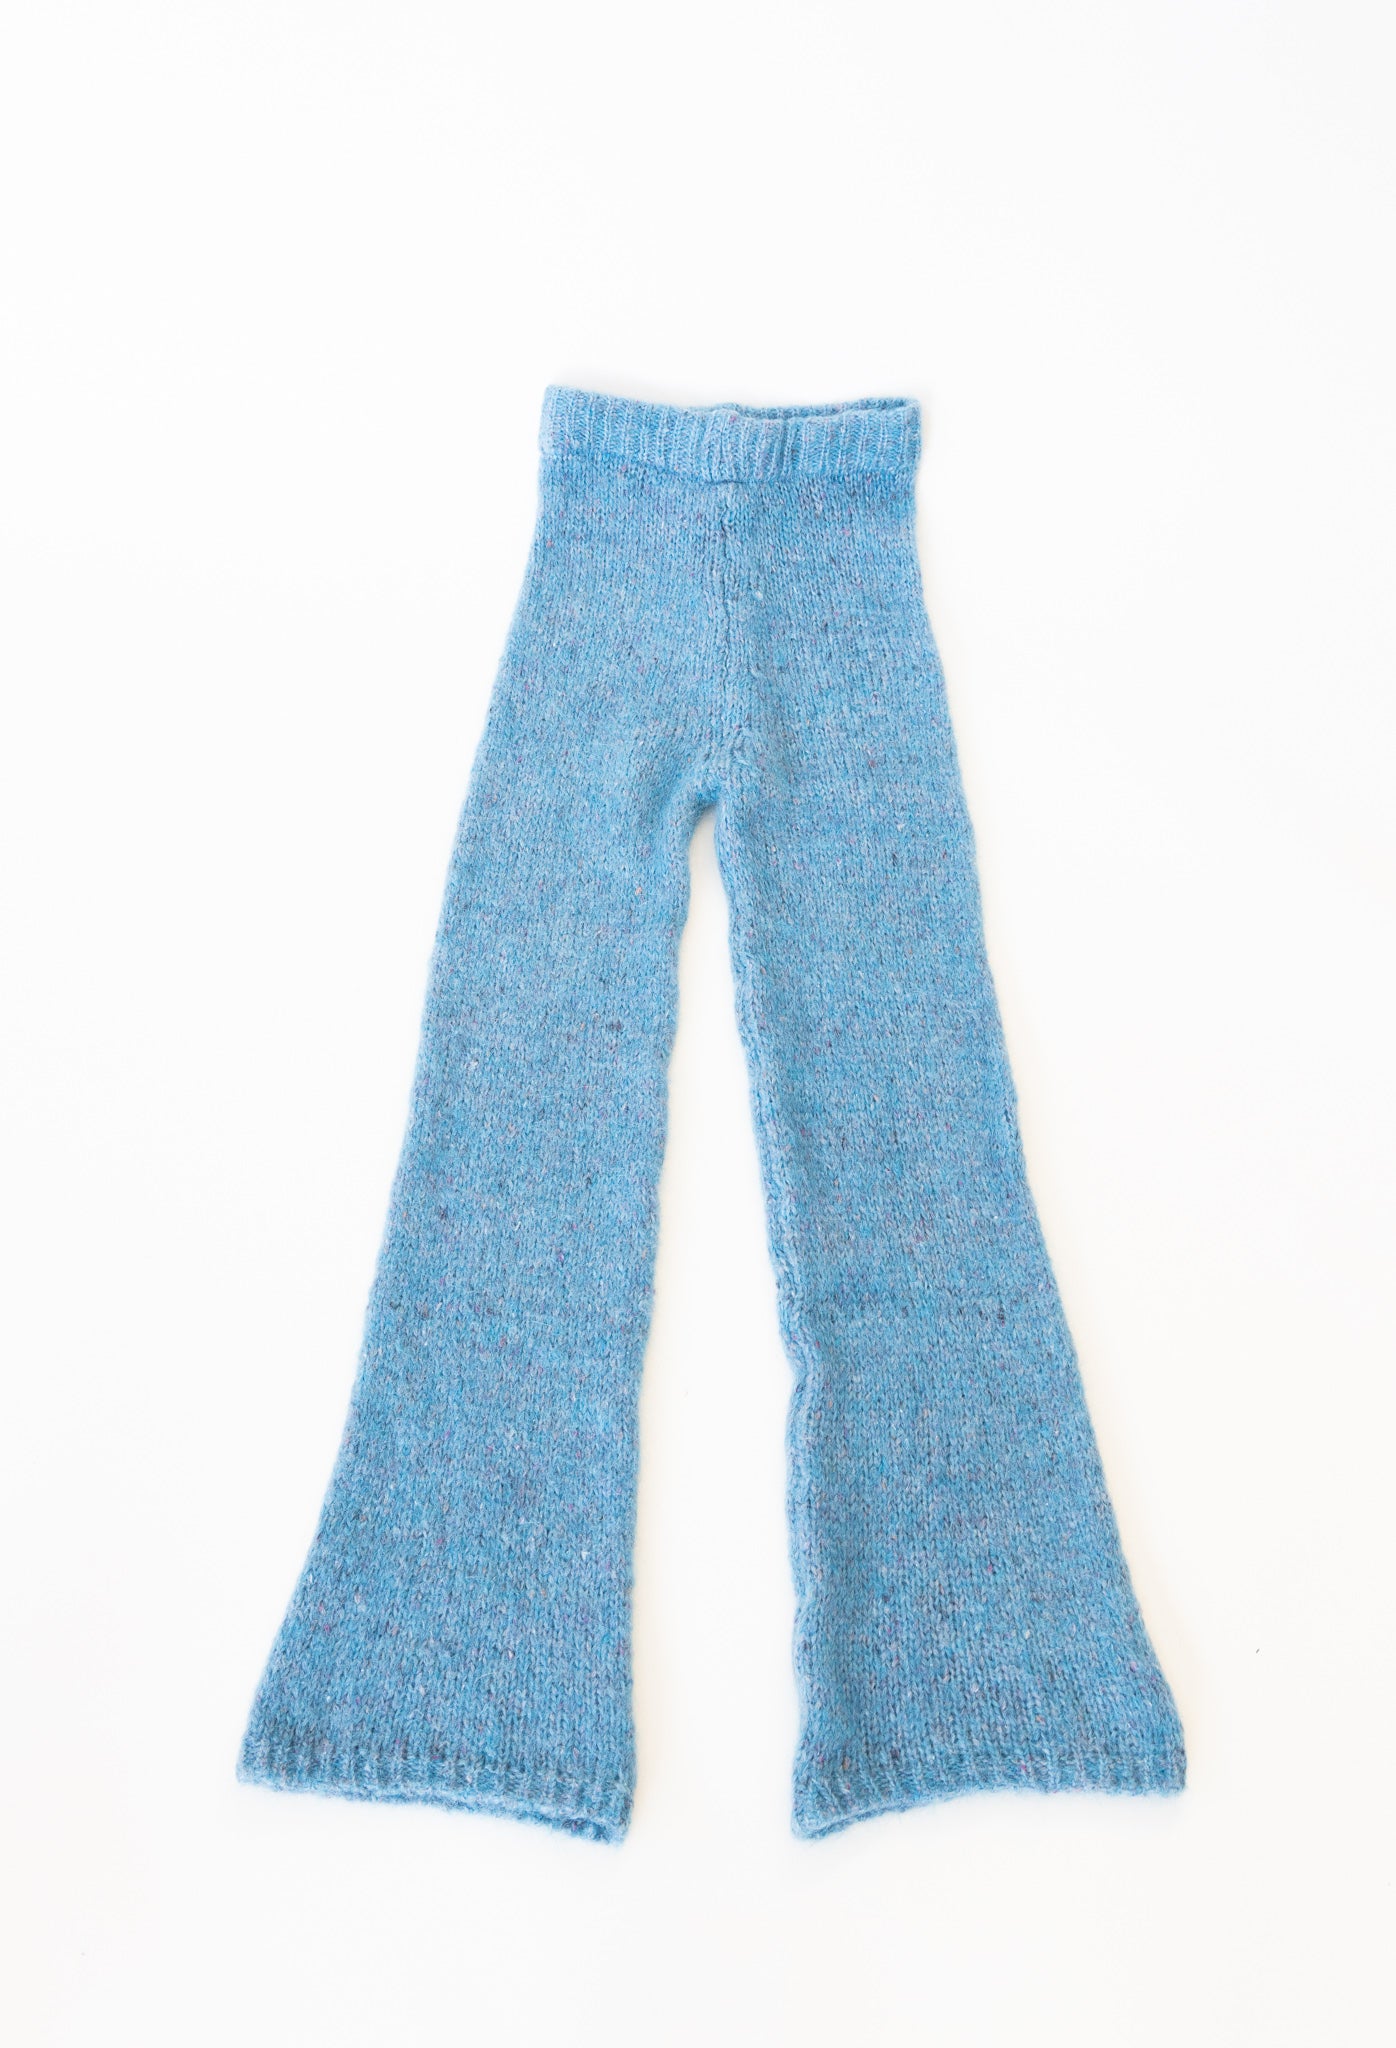 Orion knit pants